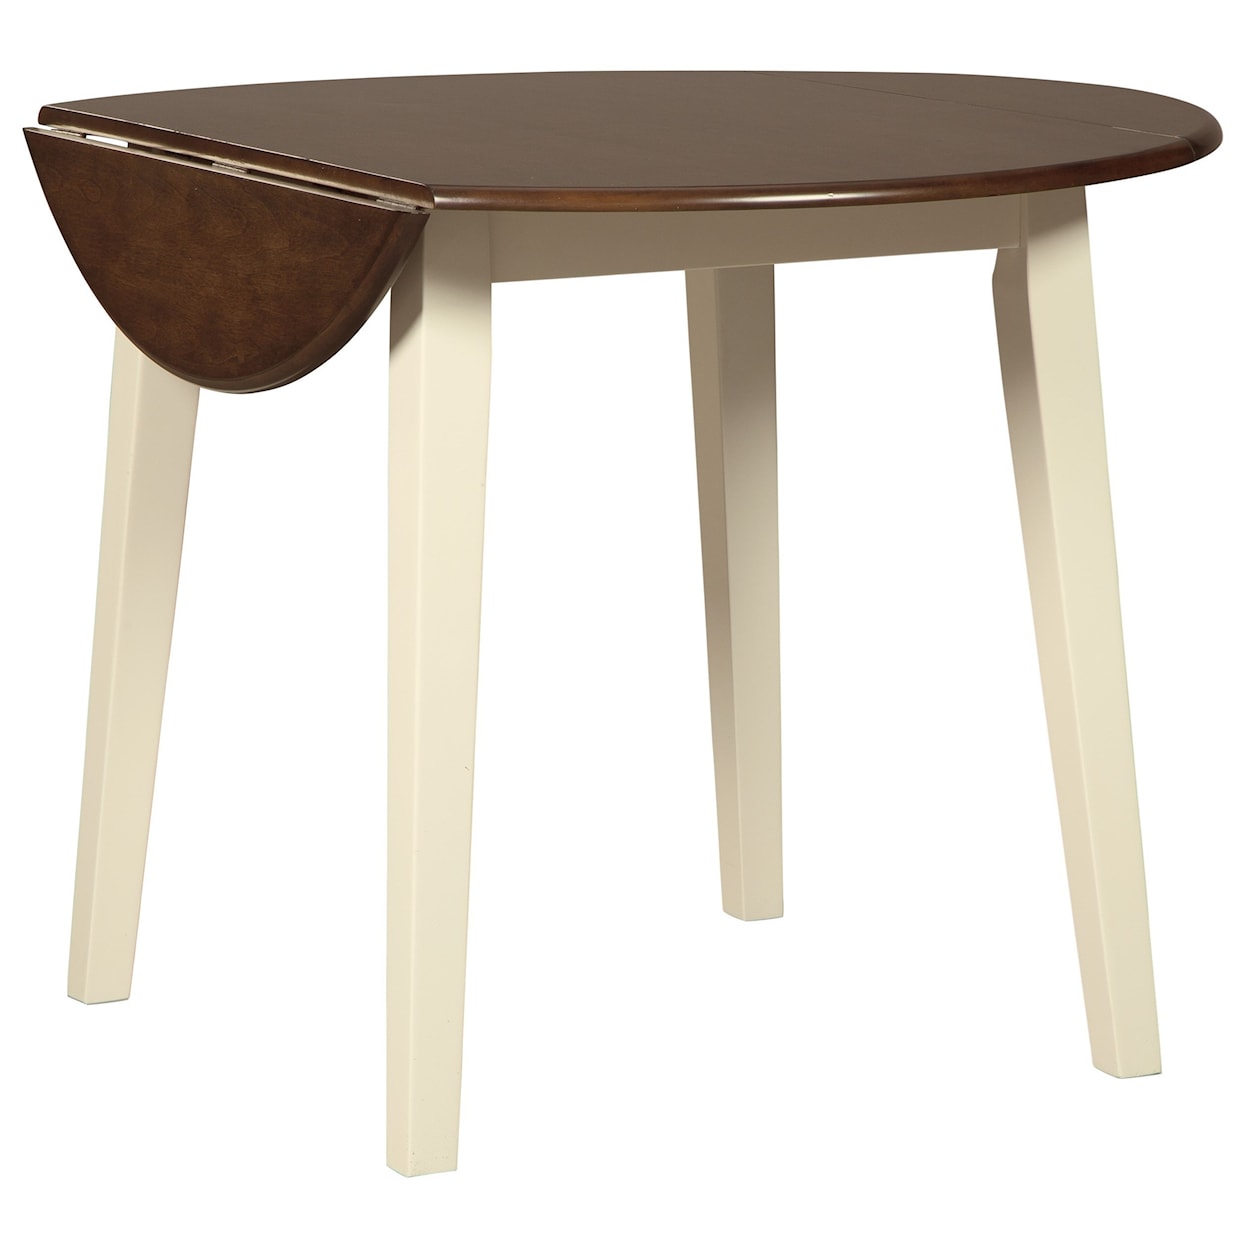 Ashley Furniture Signature Design Woodanville 3-Piece Round Drop Leaf Table Set